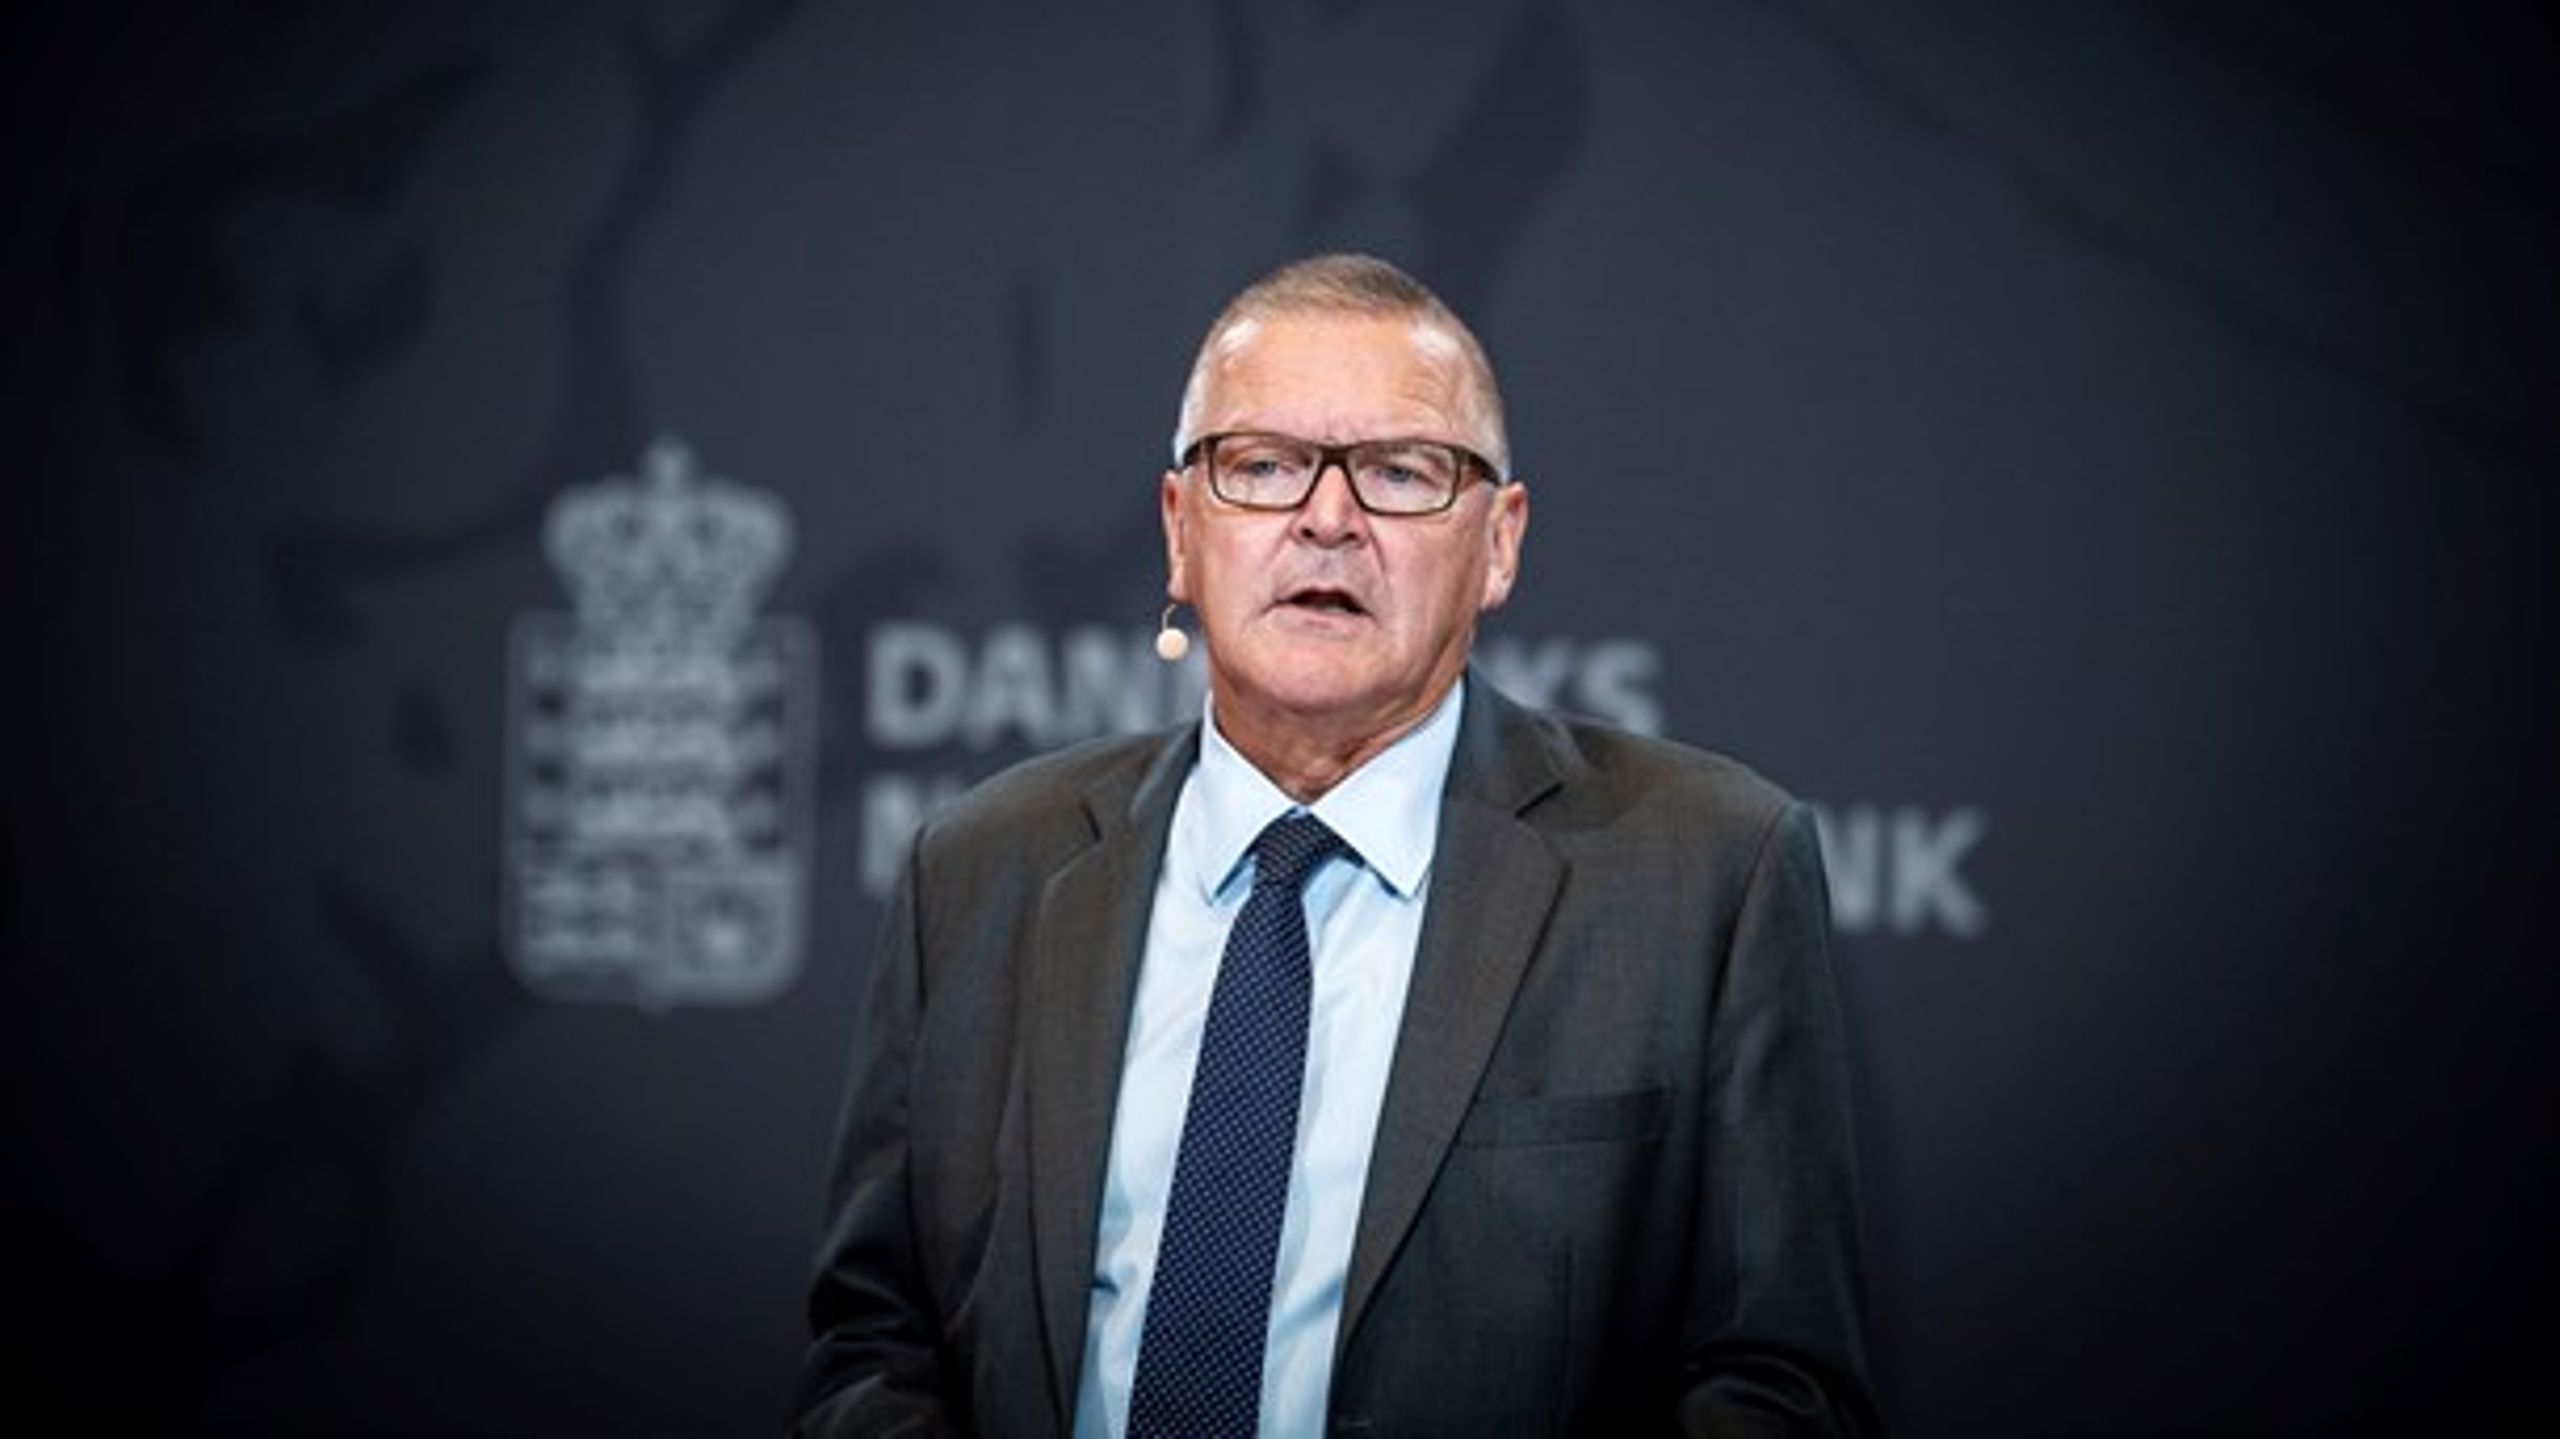 Direktør i Nationalbanken Lars Rohde præsenterer en ny prognose for dansk økonomi.